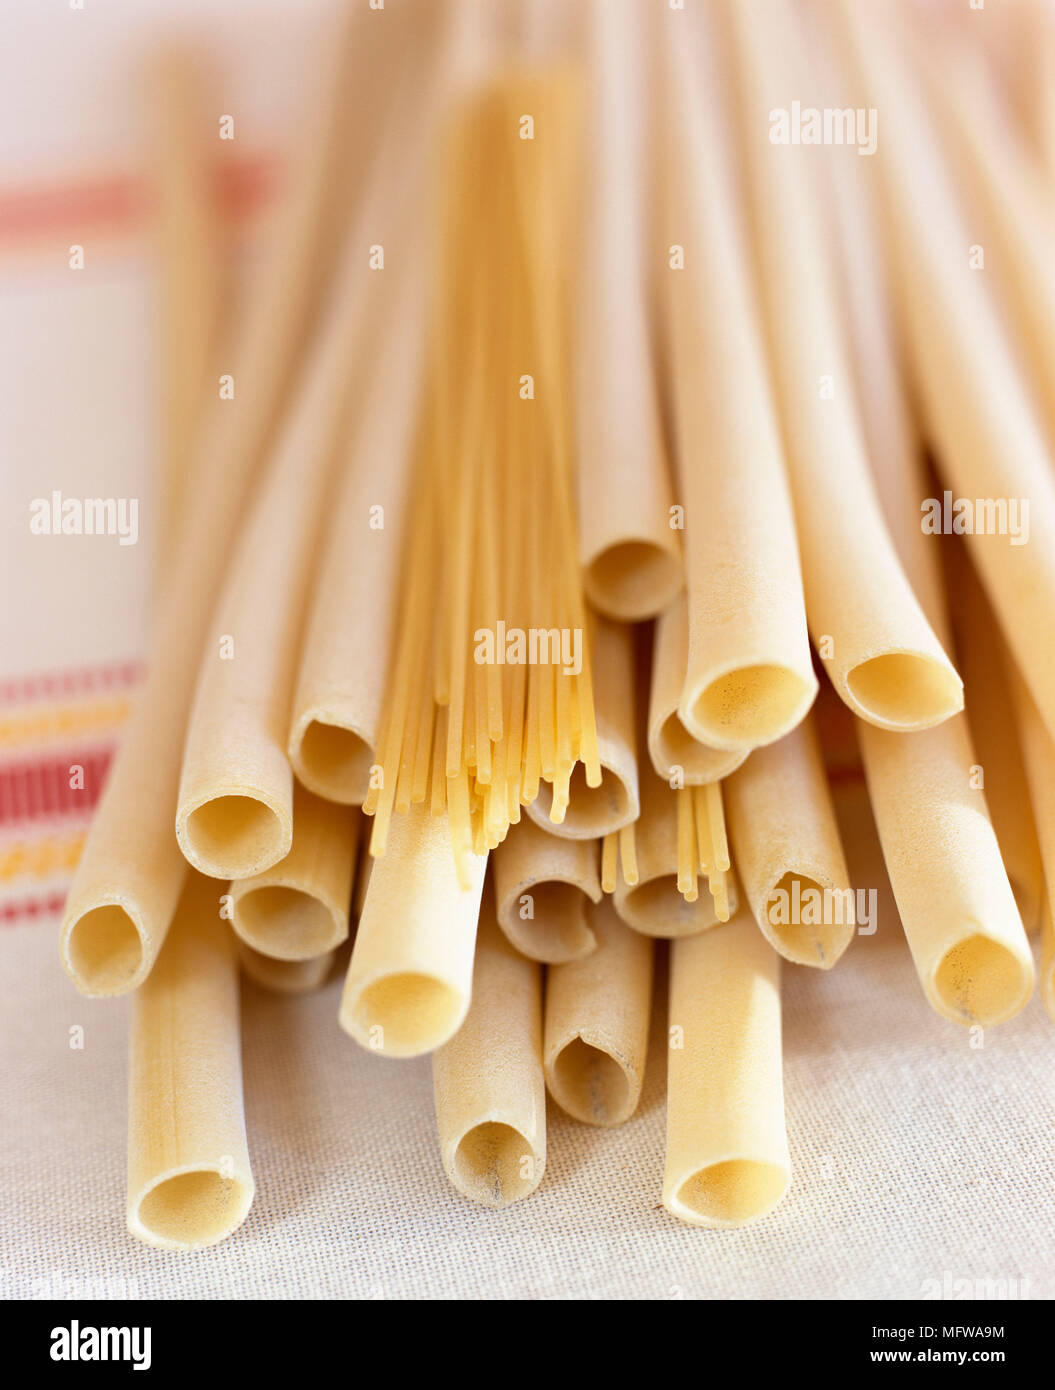 Dried pasta tubes and spaghetti Stock Photo